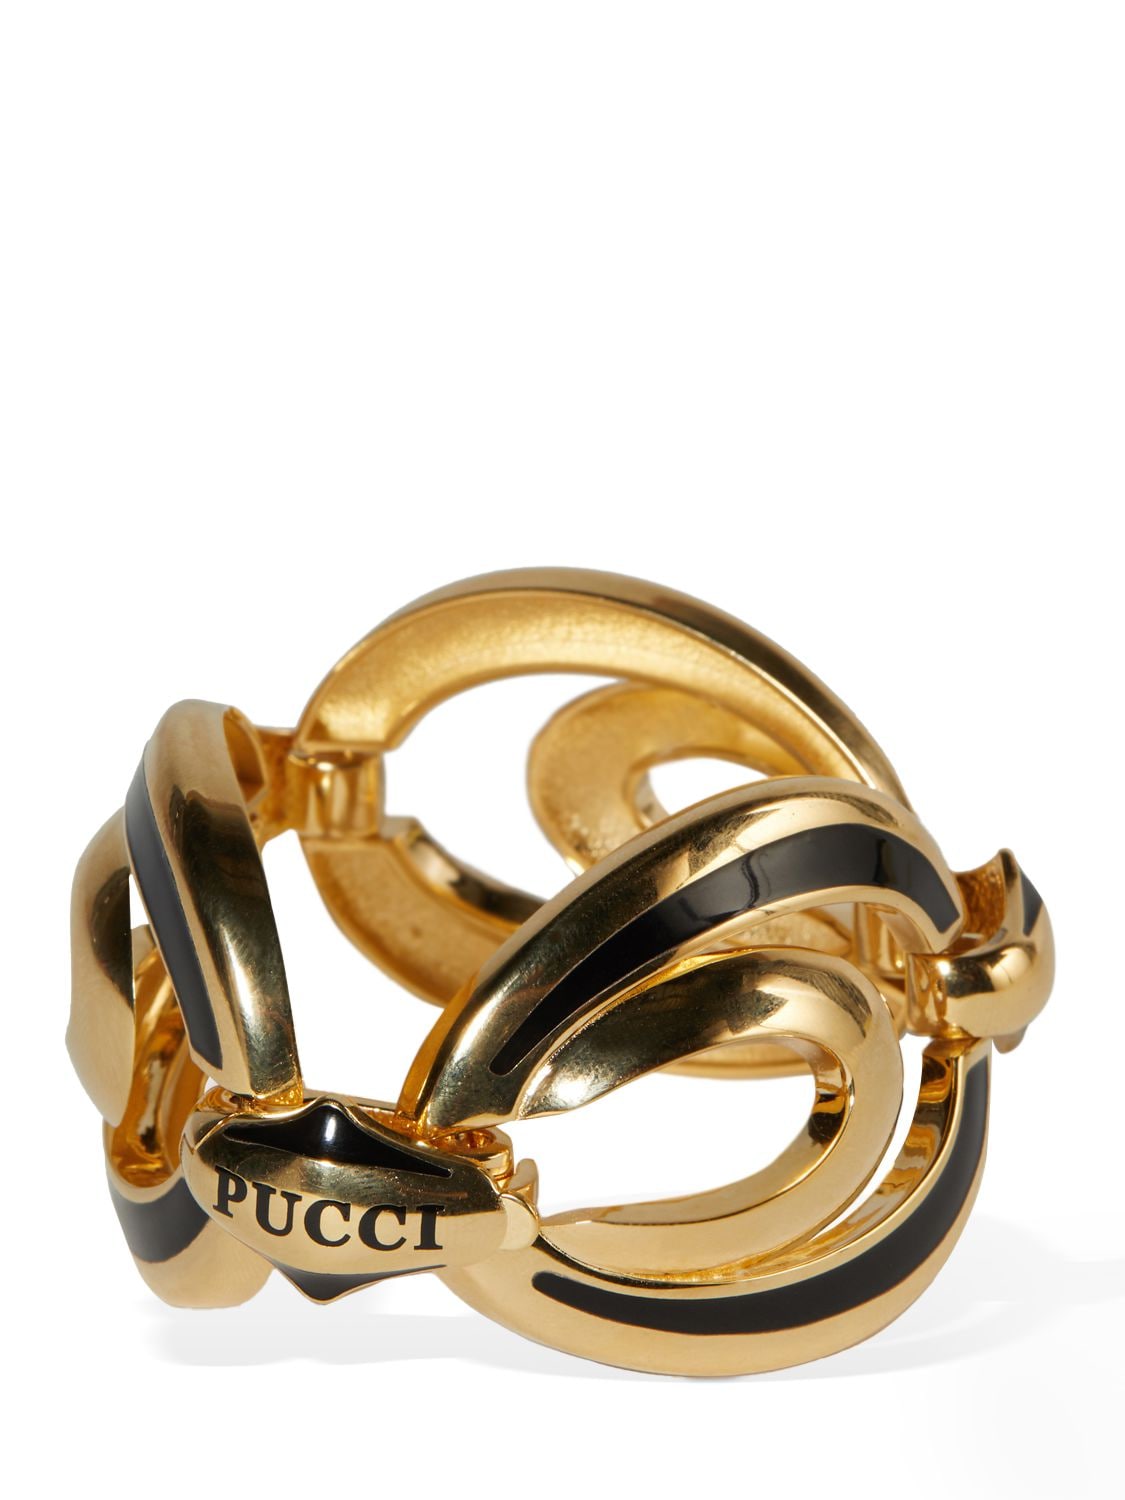 Pucci Rombi Enameled Chain Bracelet In Gold,black